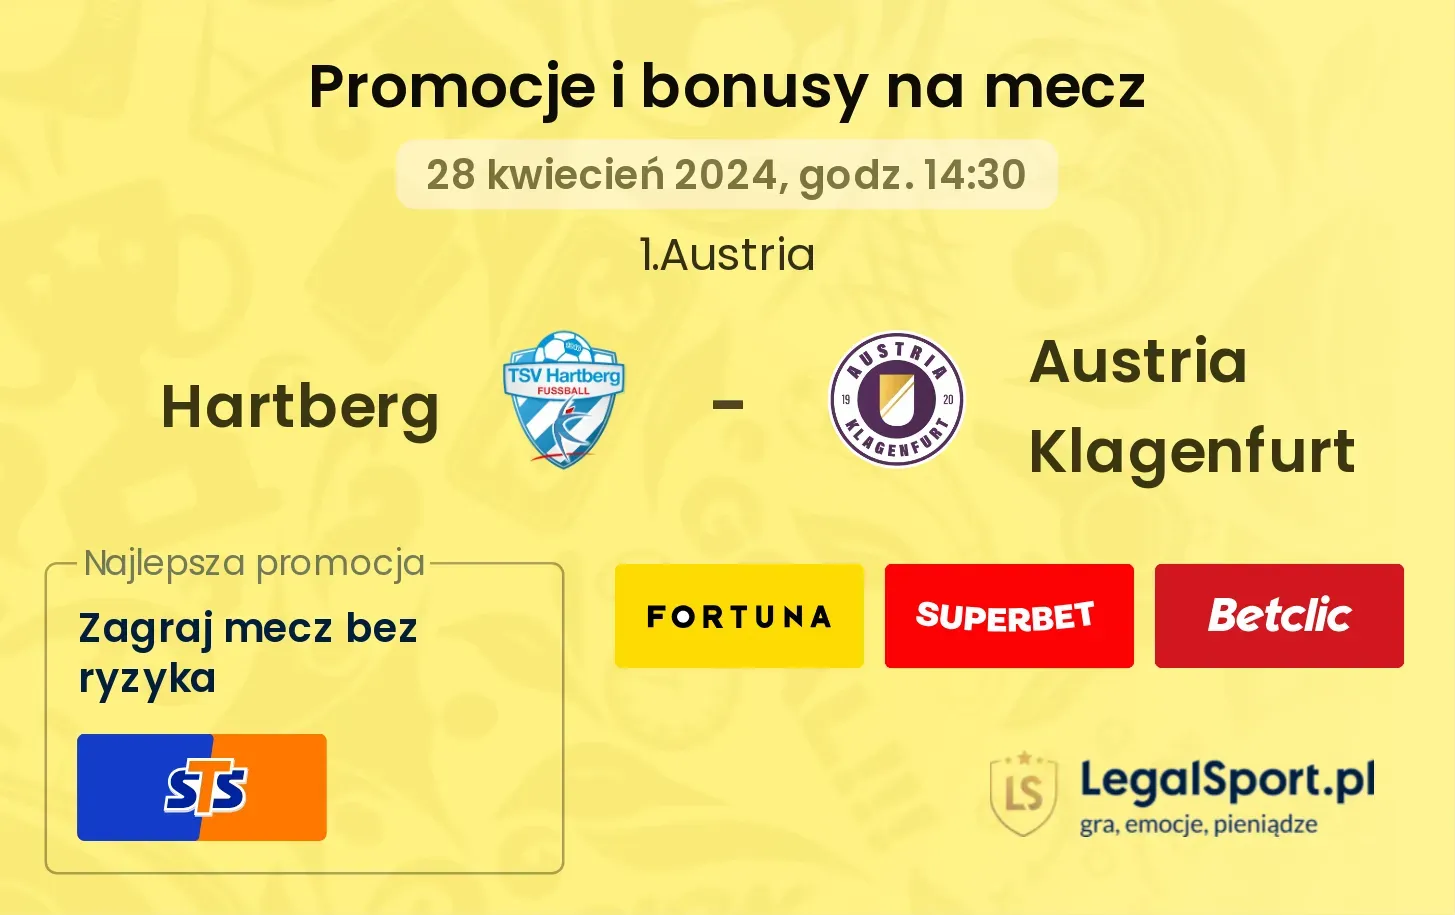 Hartberg - Austria Klagenfurt promocje bonusy na mecz